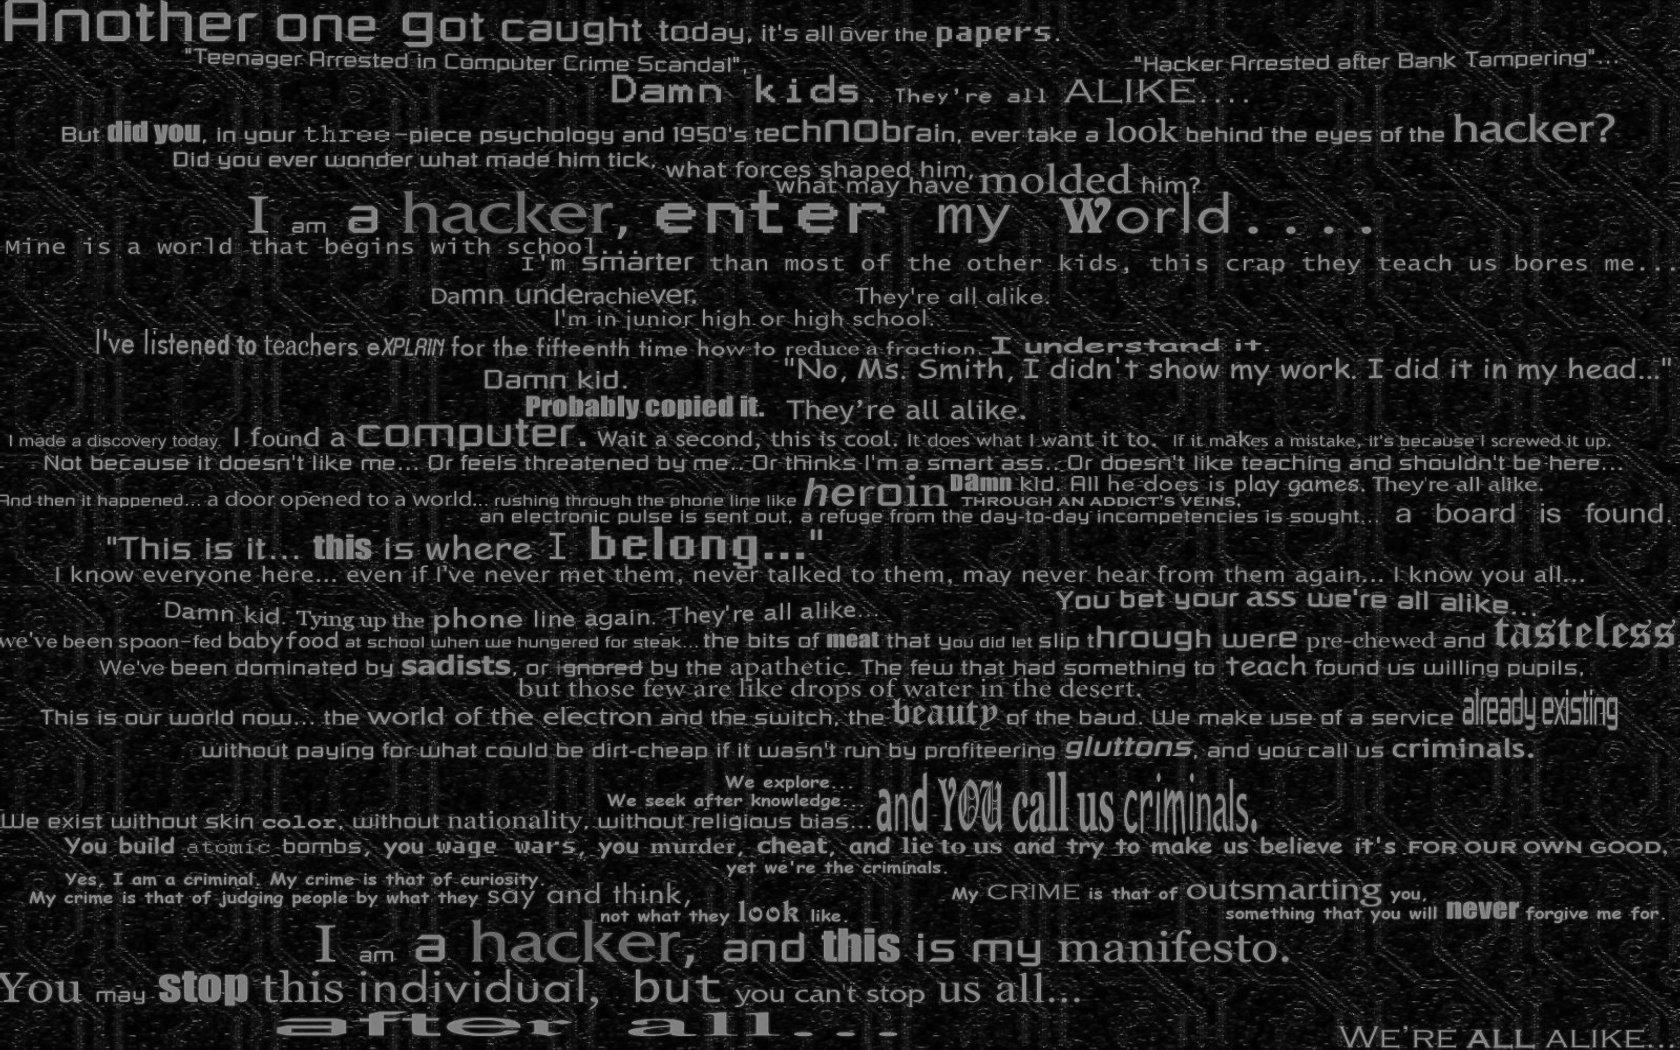 matrix, Sci fi, Science, Fiction, Action, Fighting, Futuristic, Thriller, Noir, Adventure, Warrior, Hacker, Gacking, Hack, Computer, Binary, Code, Reloaded, Revolutions, Cyberpunk, Cyber, Punk, Technics, Virus Wallpaper